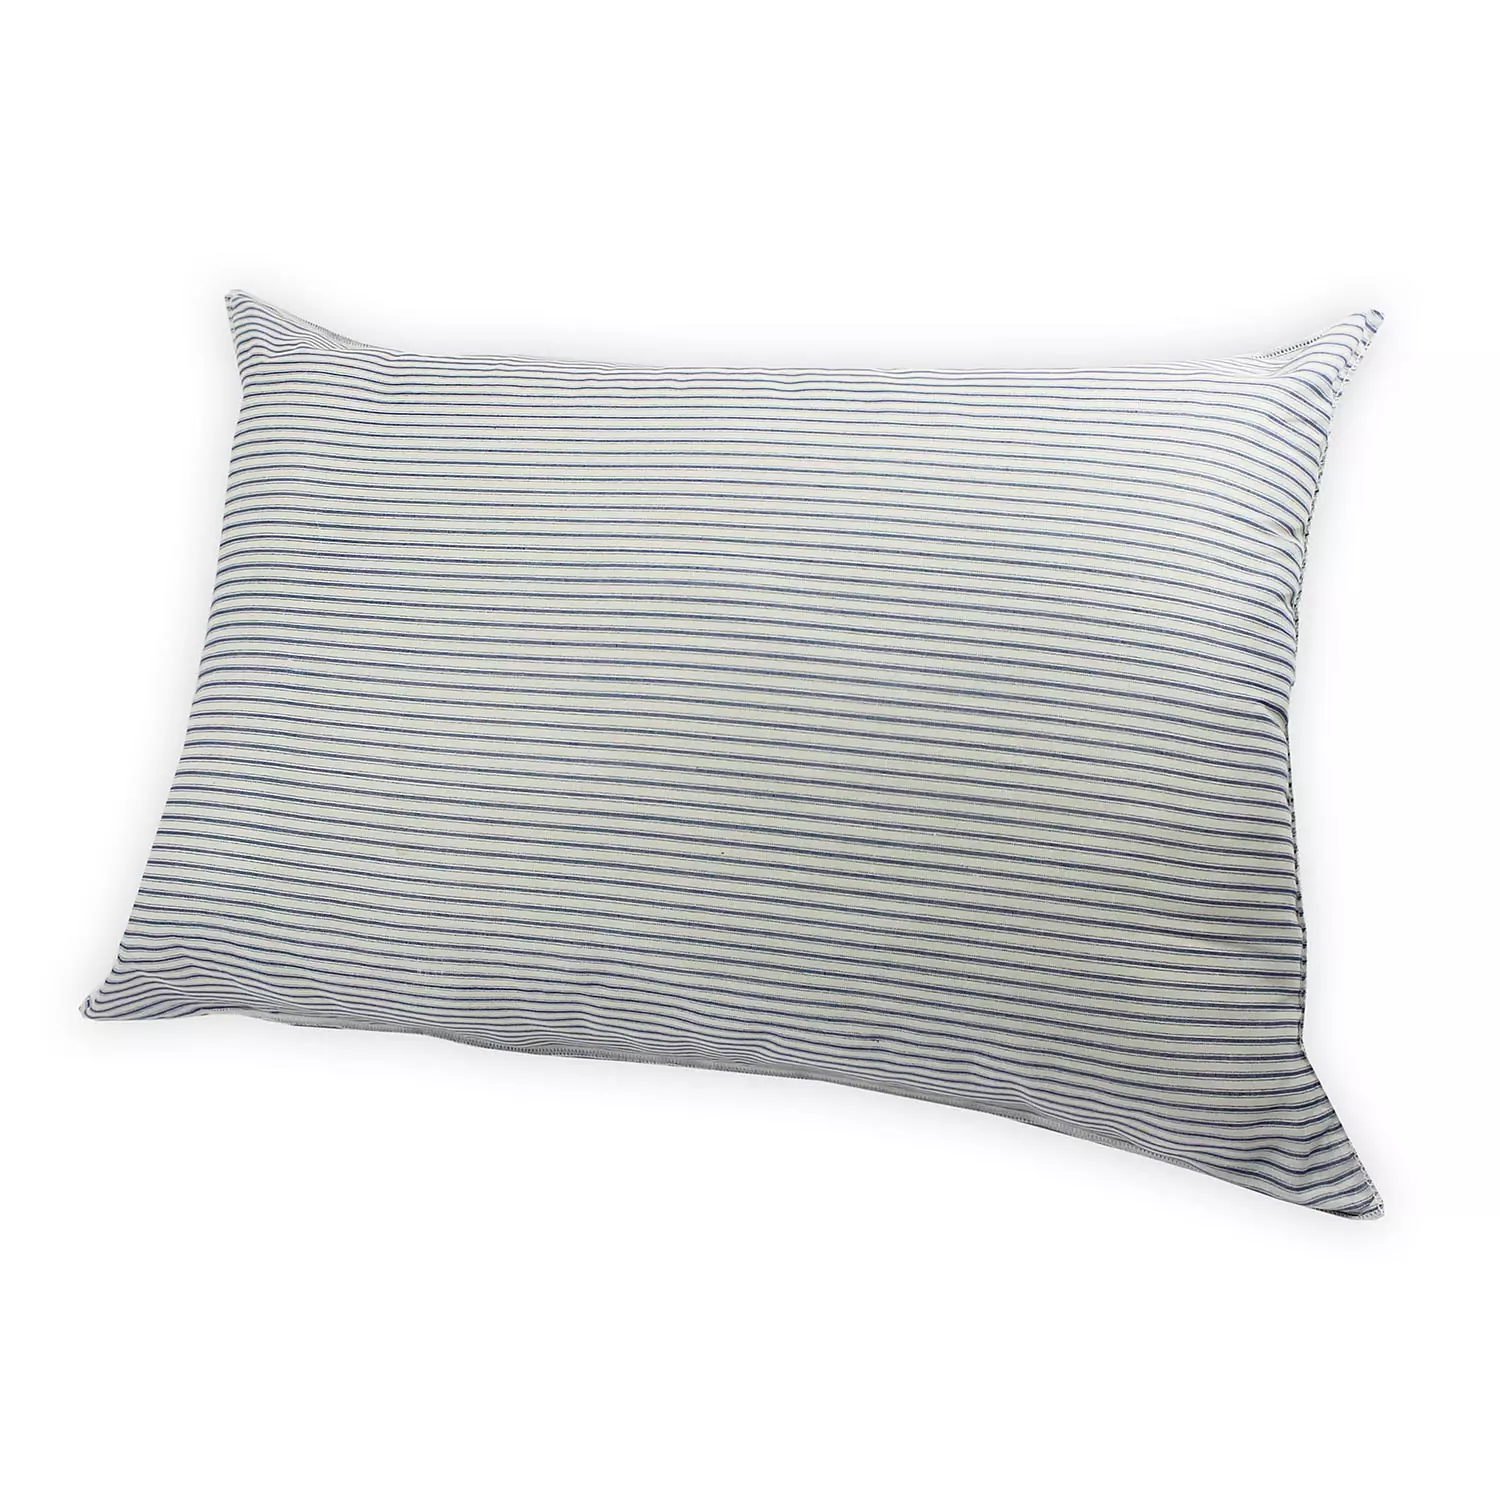 Oxford stripe pillow, 20"x28" - Jumbo